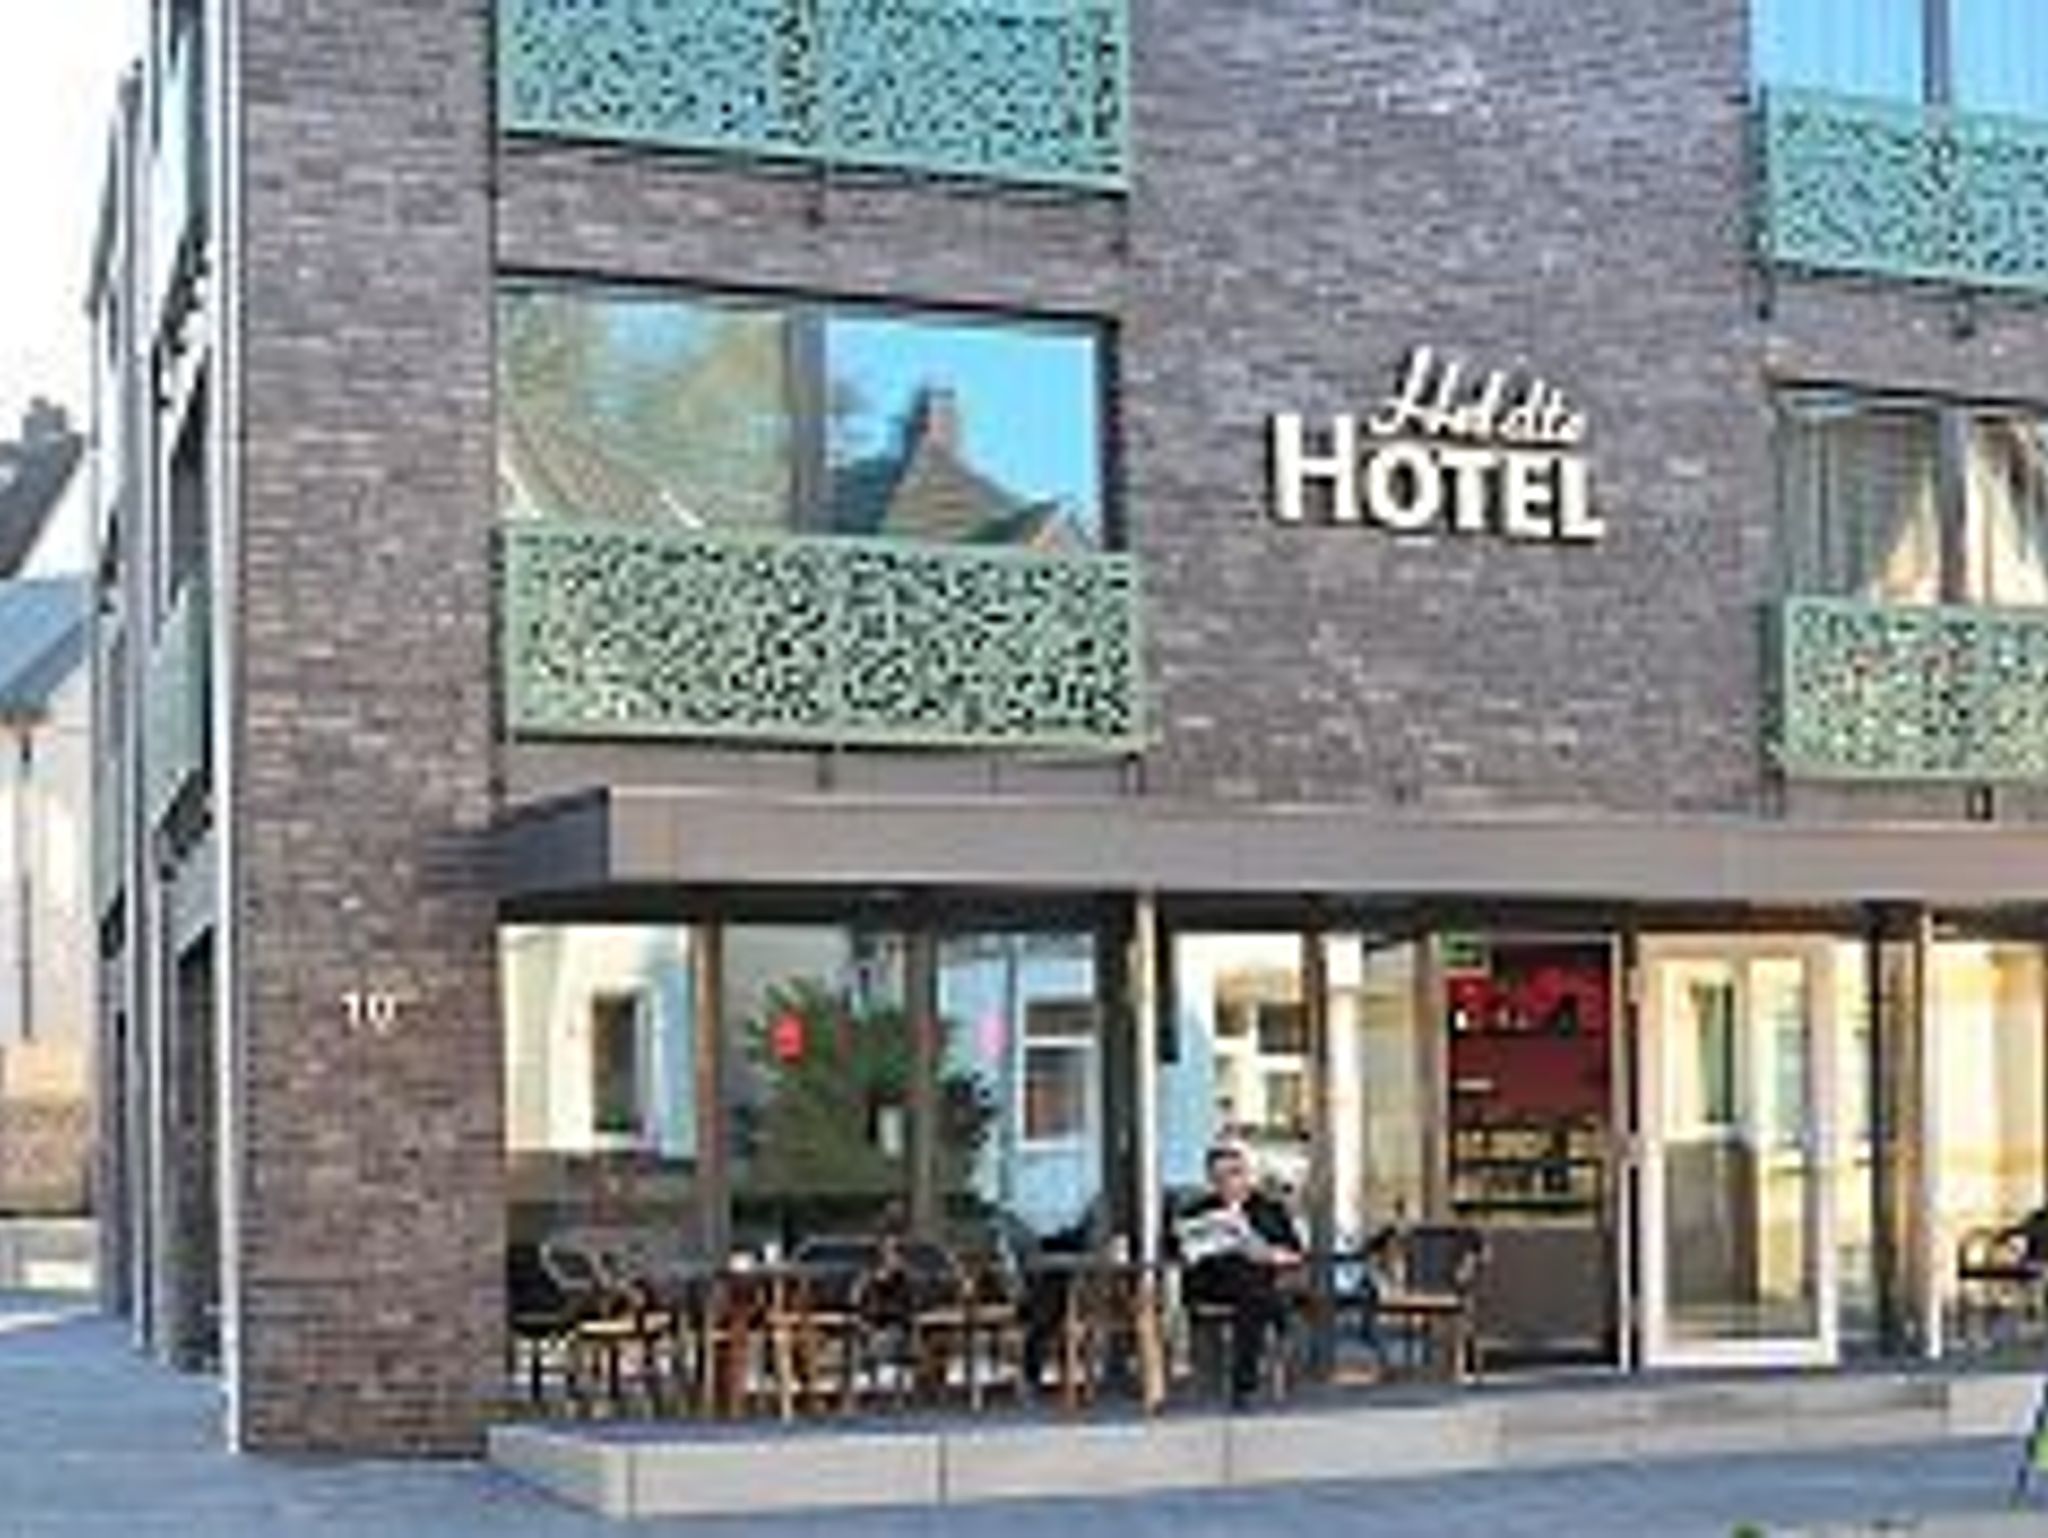 Hotel Koenigstein Kiel by Tulip Inn